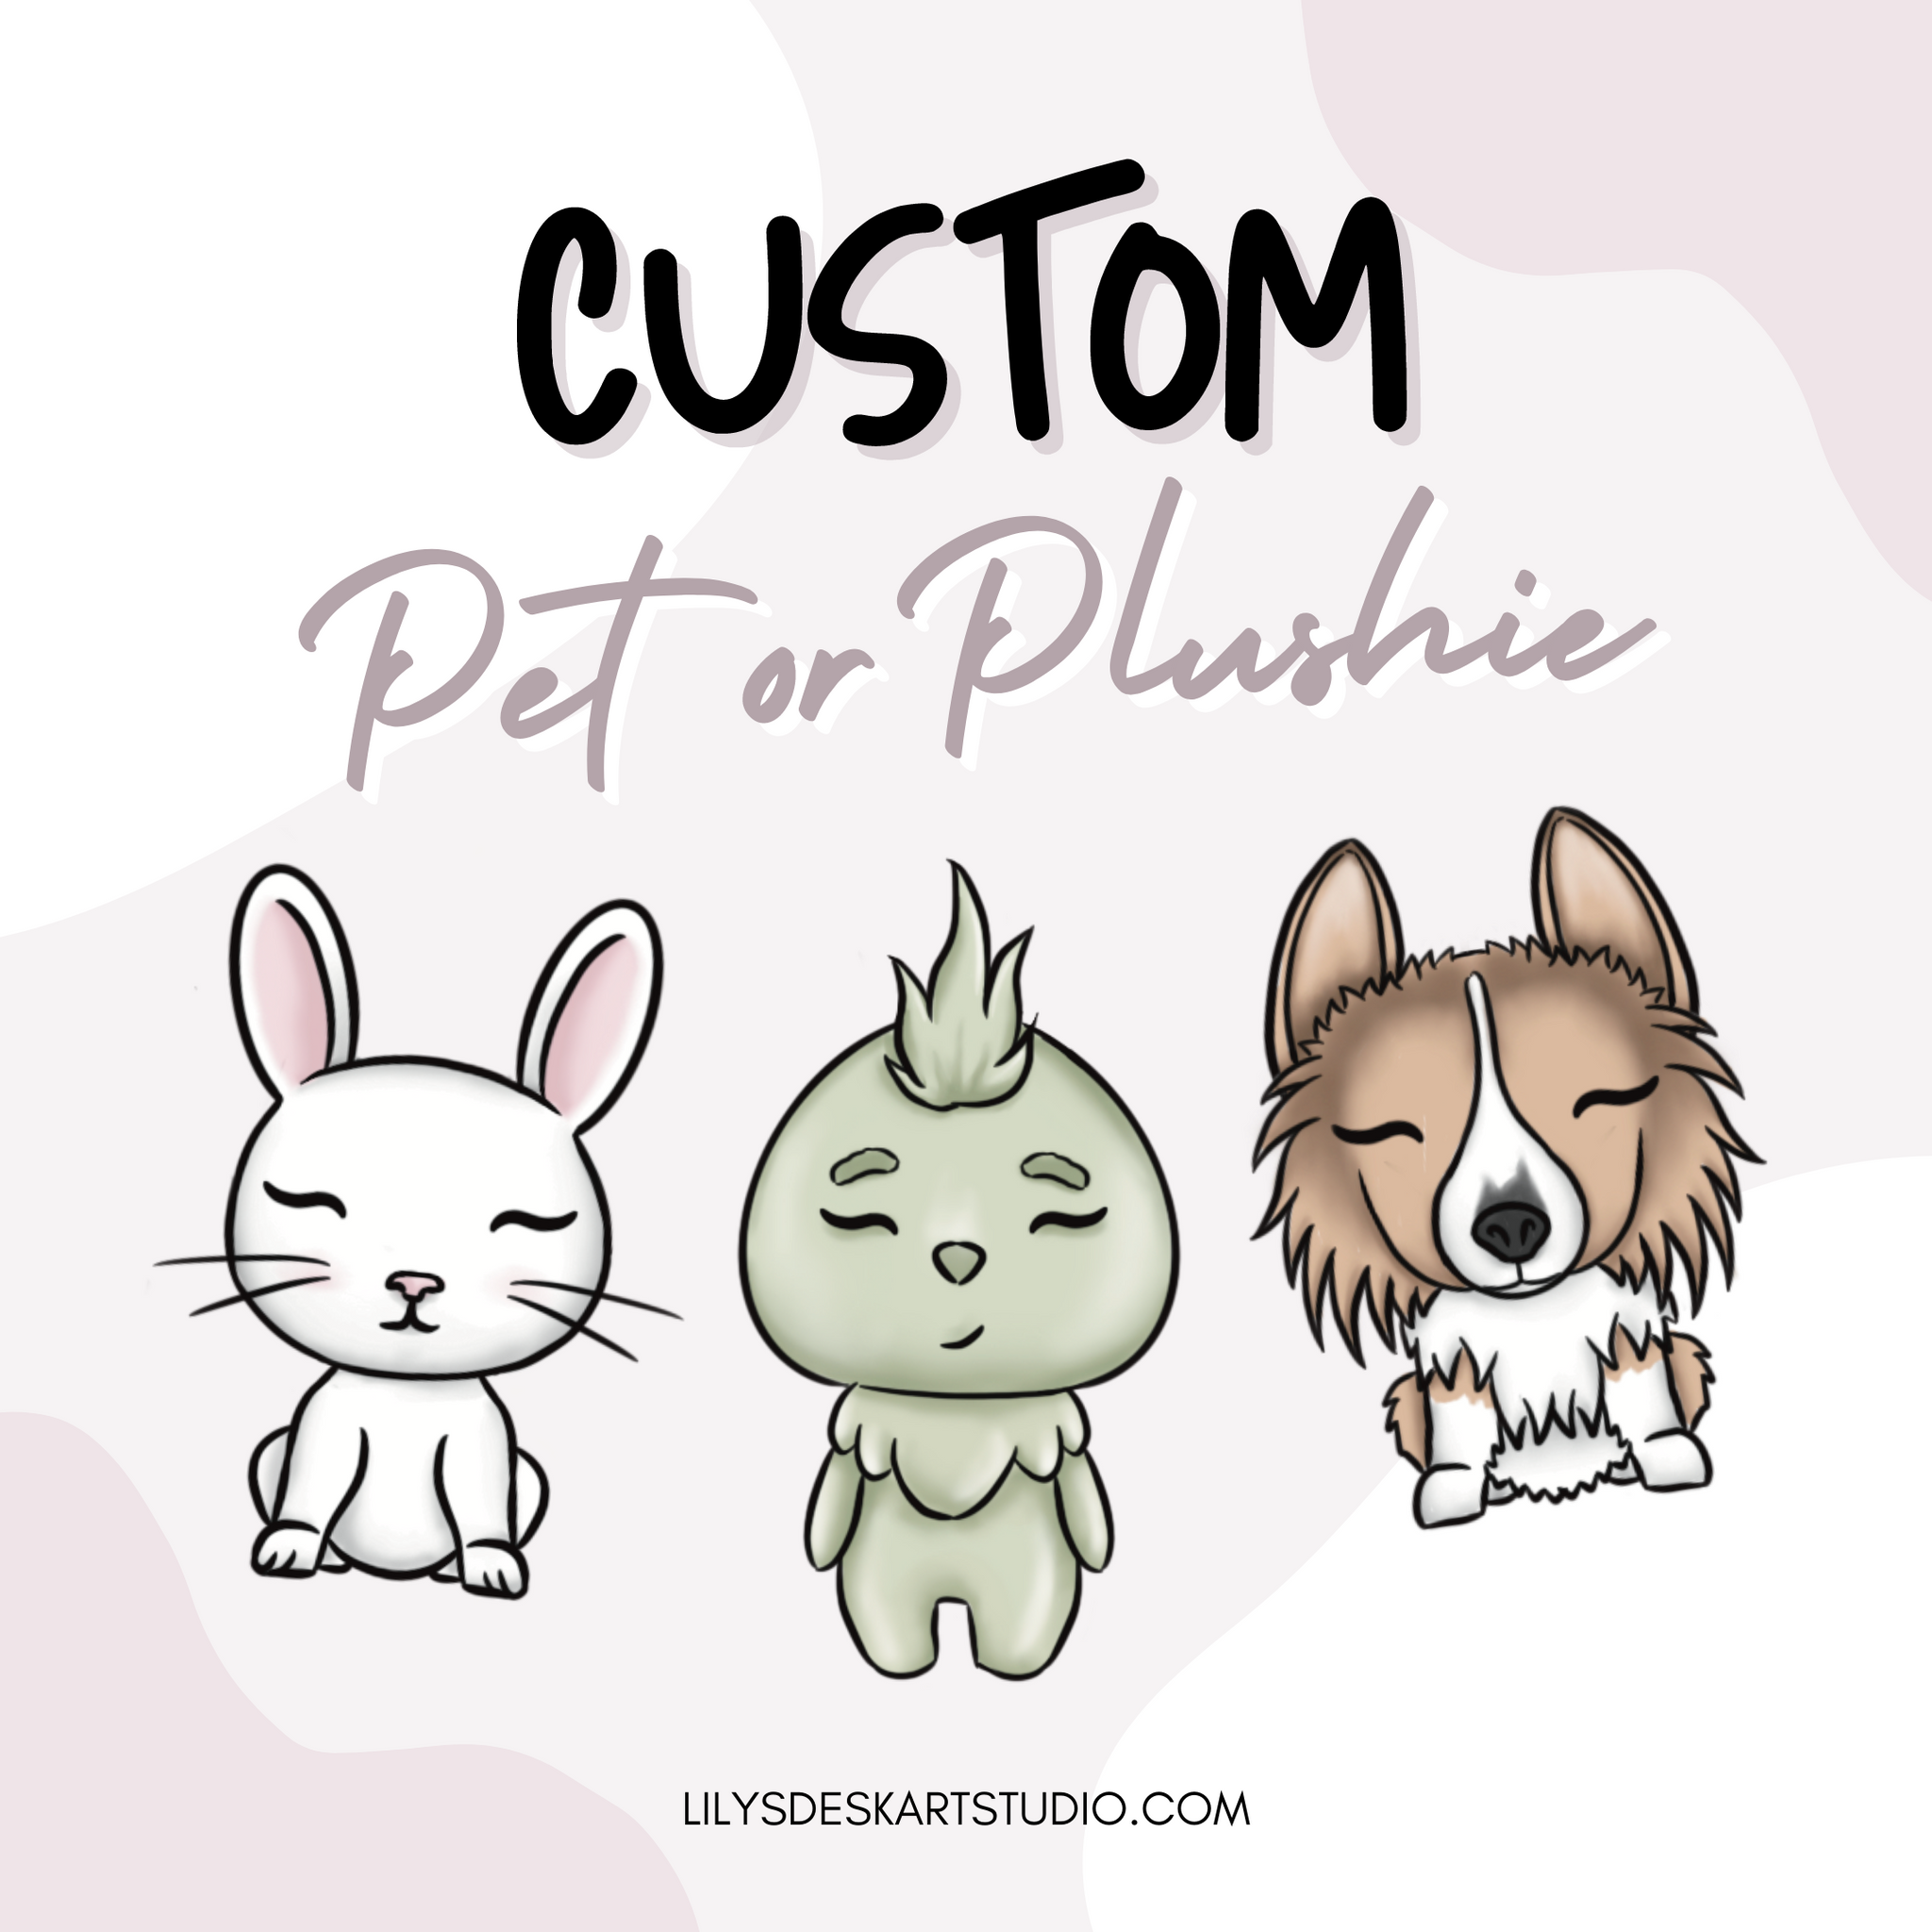 Custom Pet/Plushie Doodle